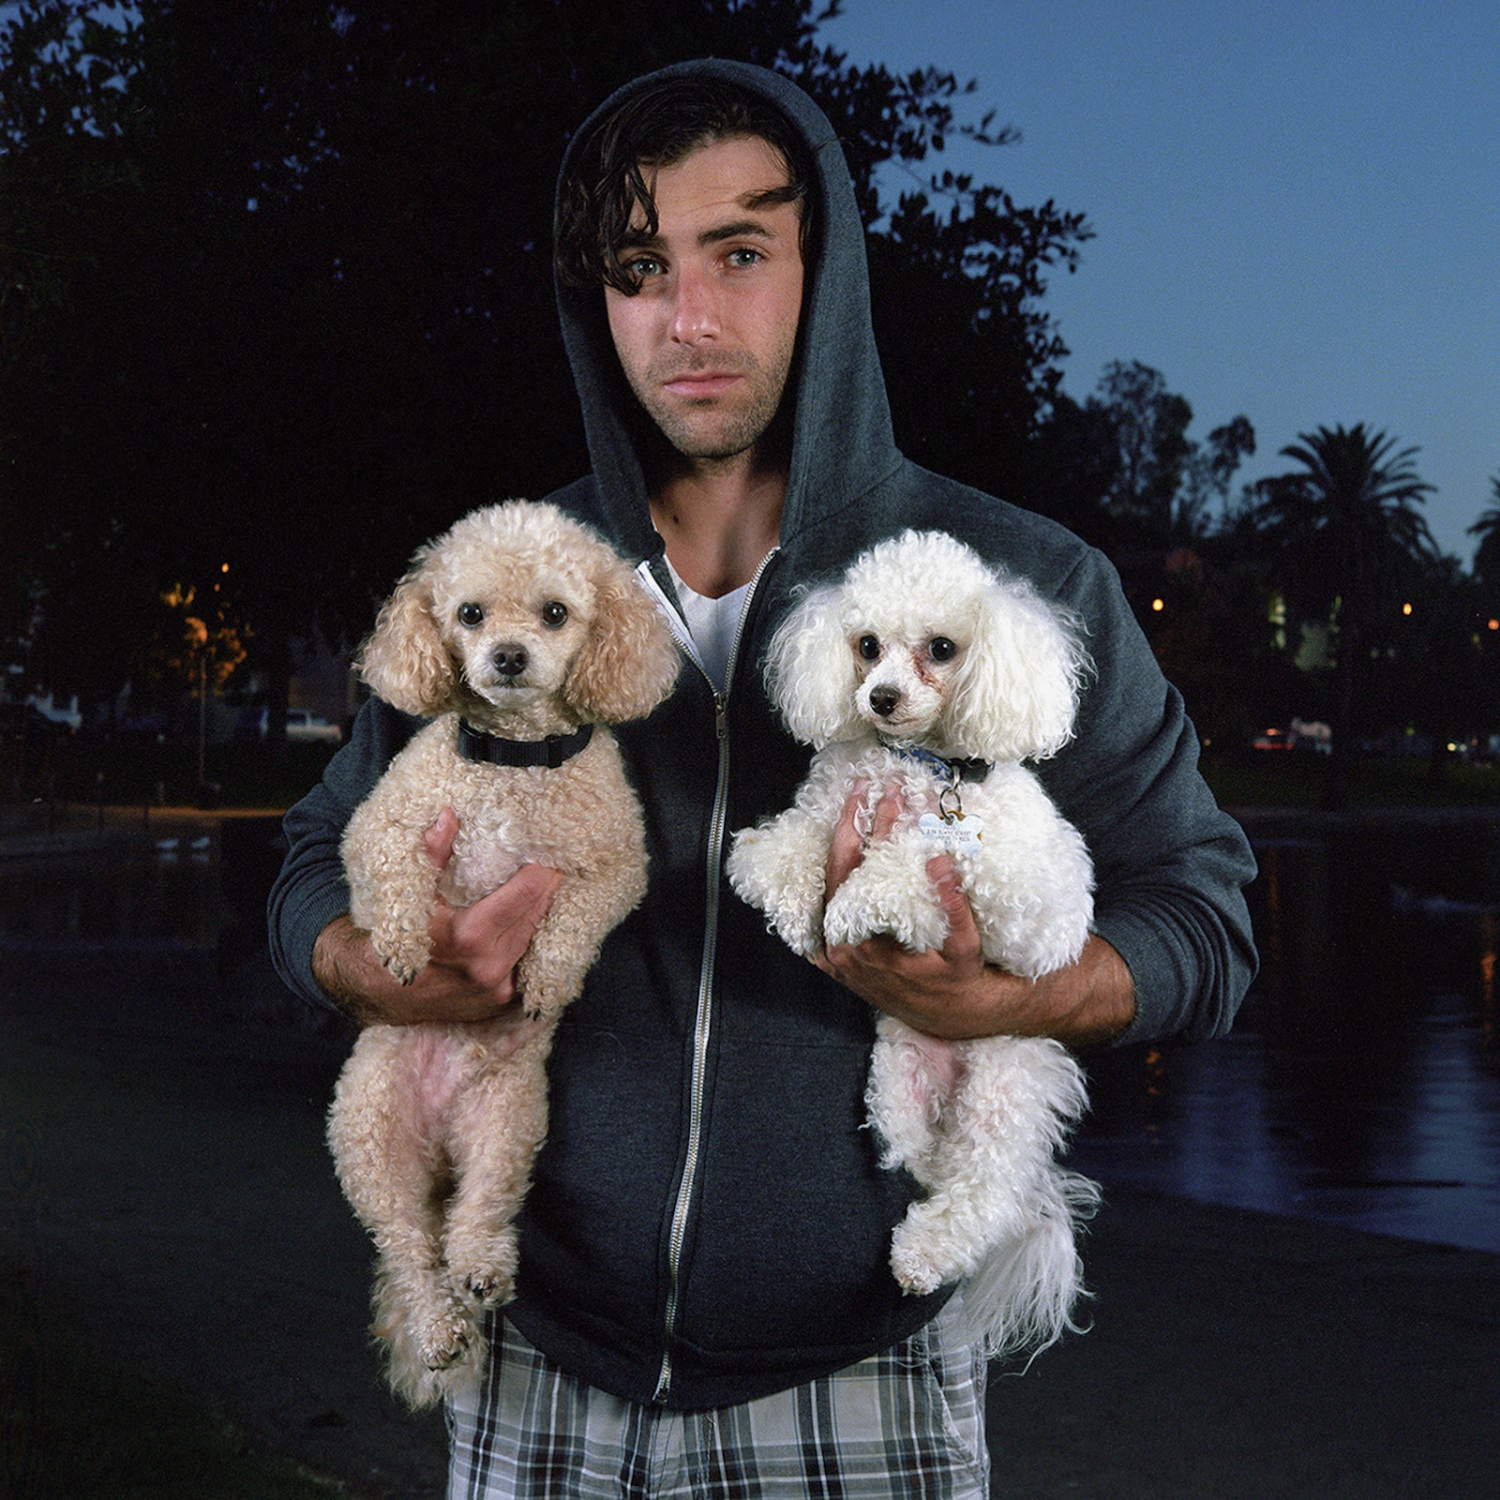 Dog Walkers of Echo Park - 